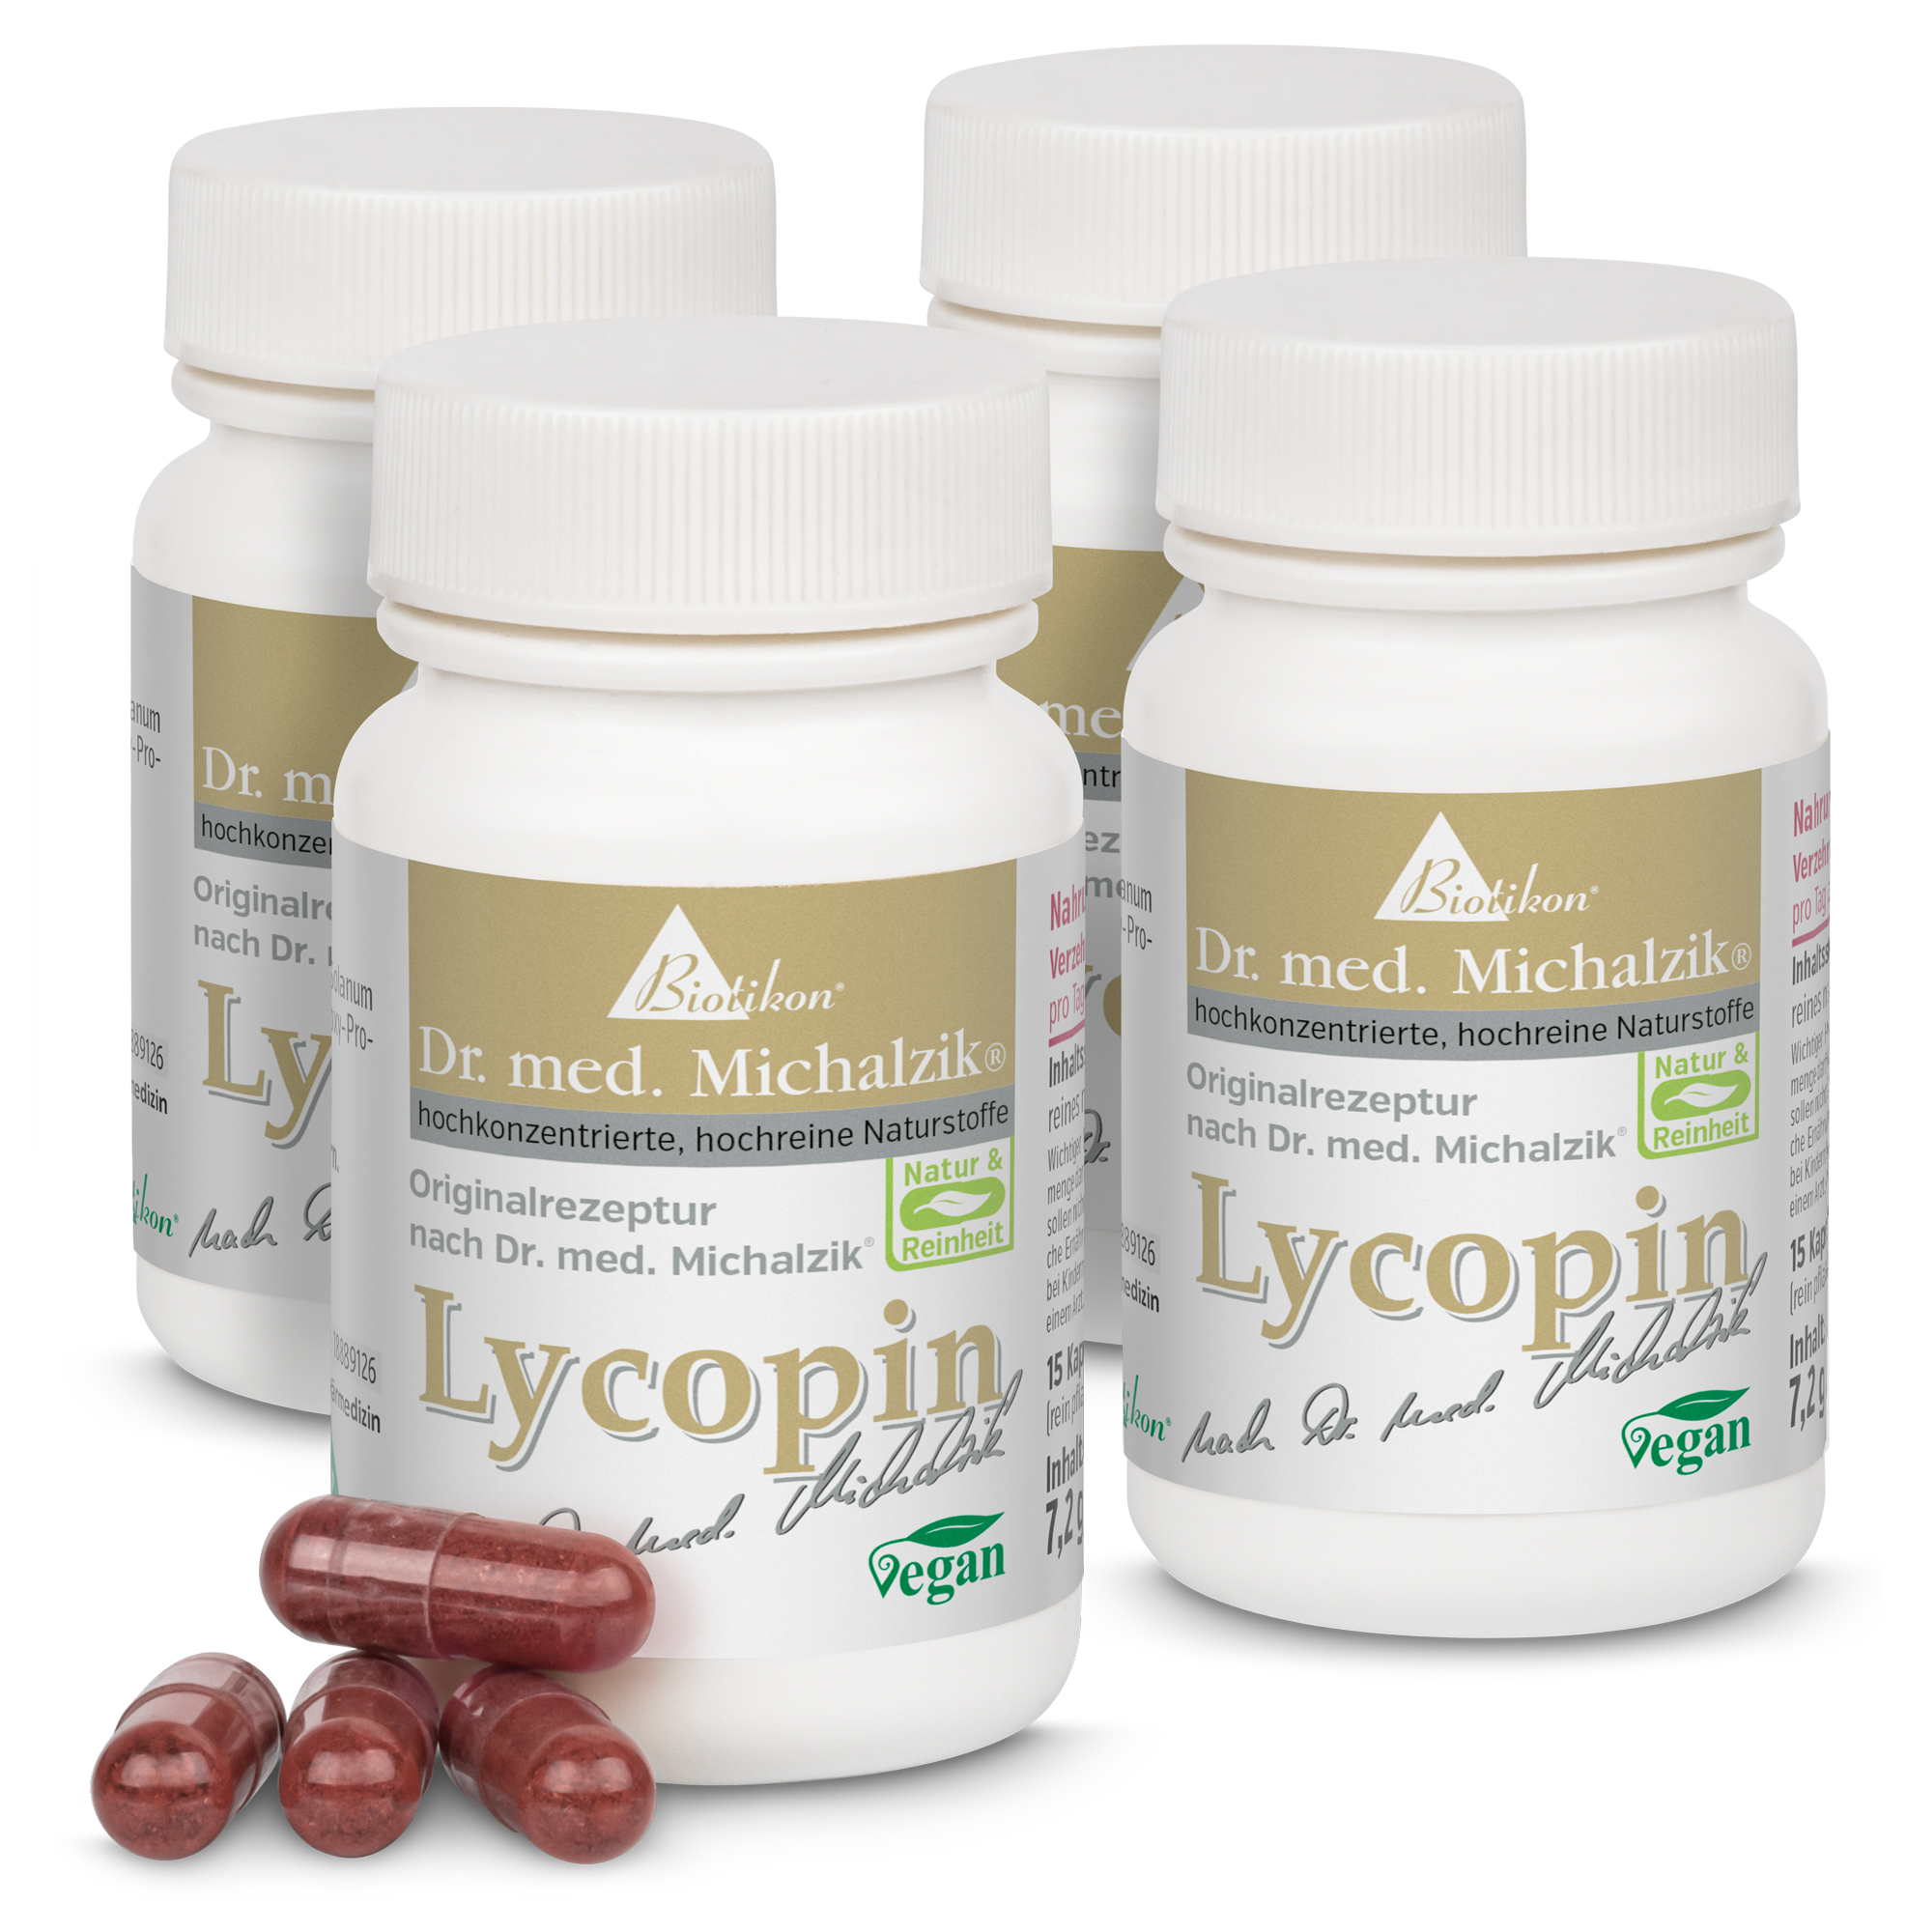 Lycopene by Dr. med. Michalzik